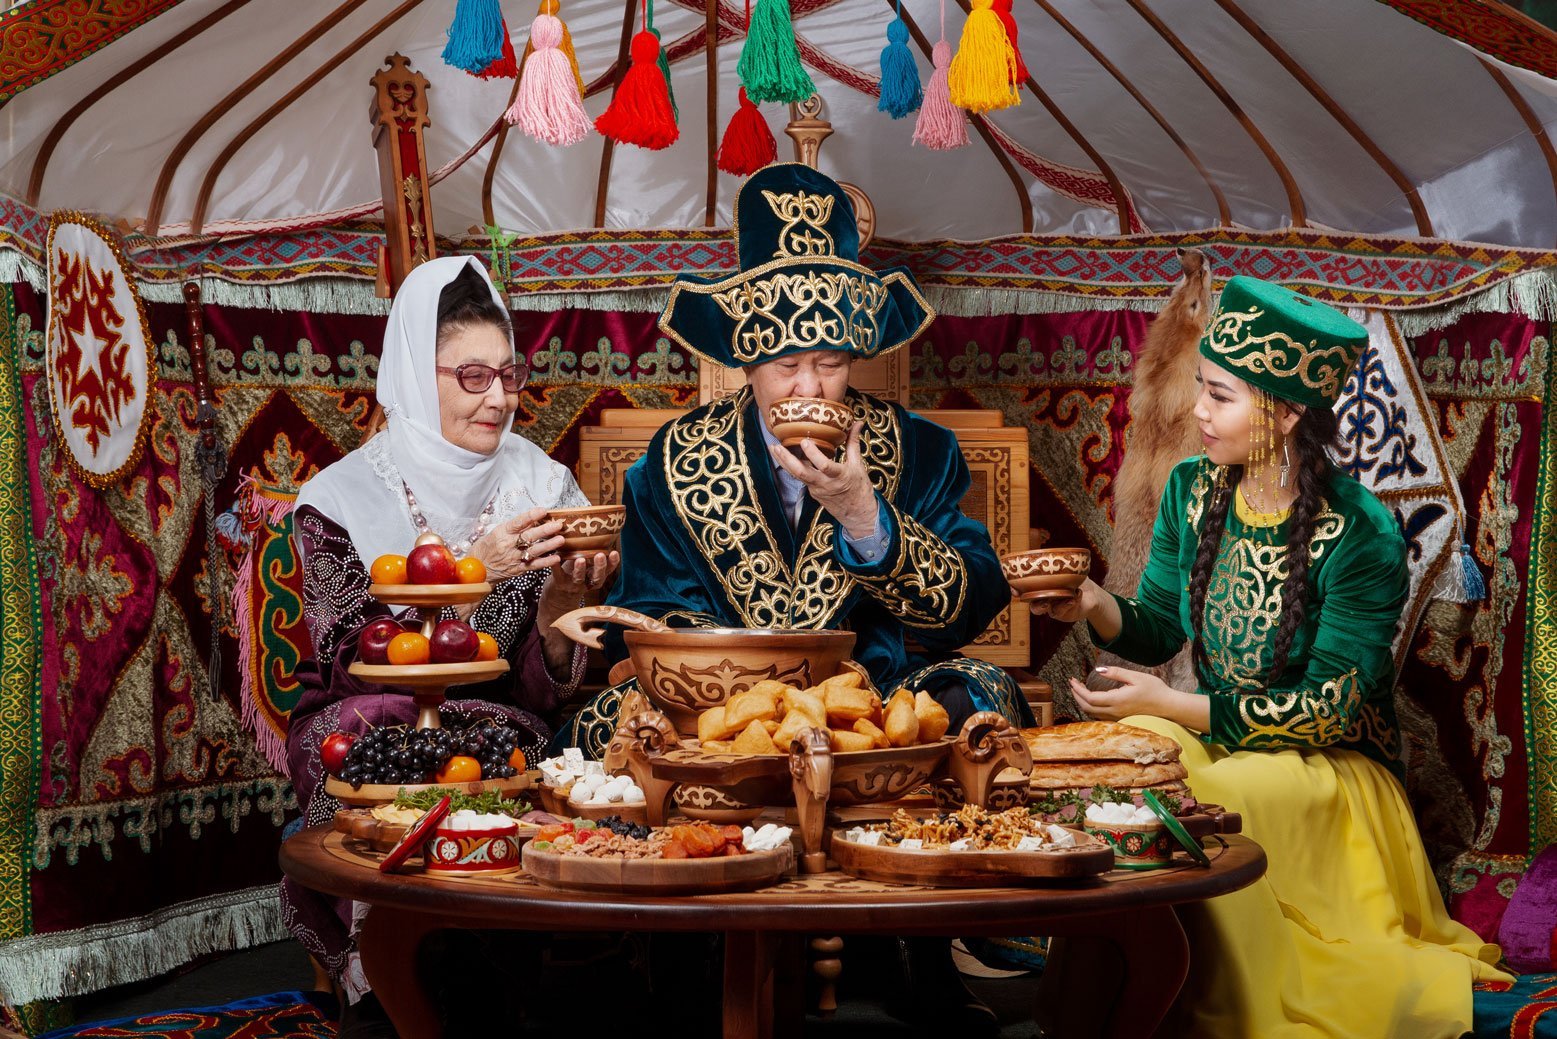 Kazakh traditional. Гостеприимство казахов. Казахские традиции. Гостеприимство казахского народа. Традиции казахского народа гостеприимство.